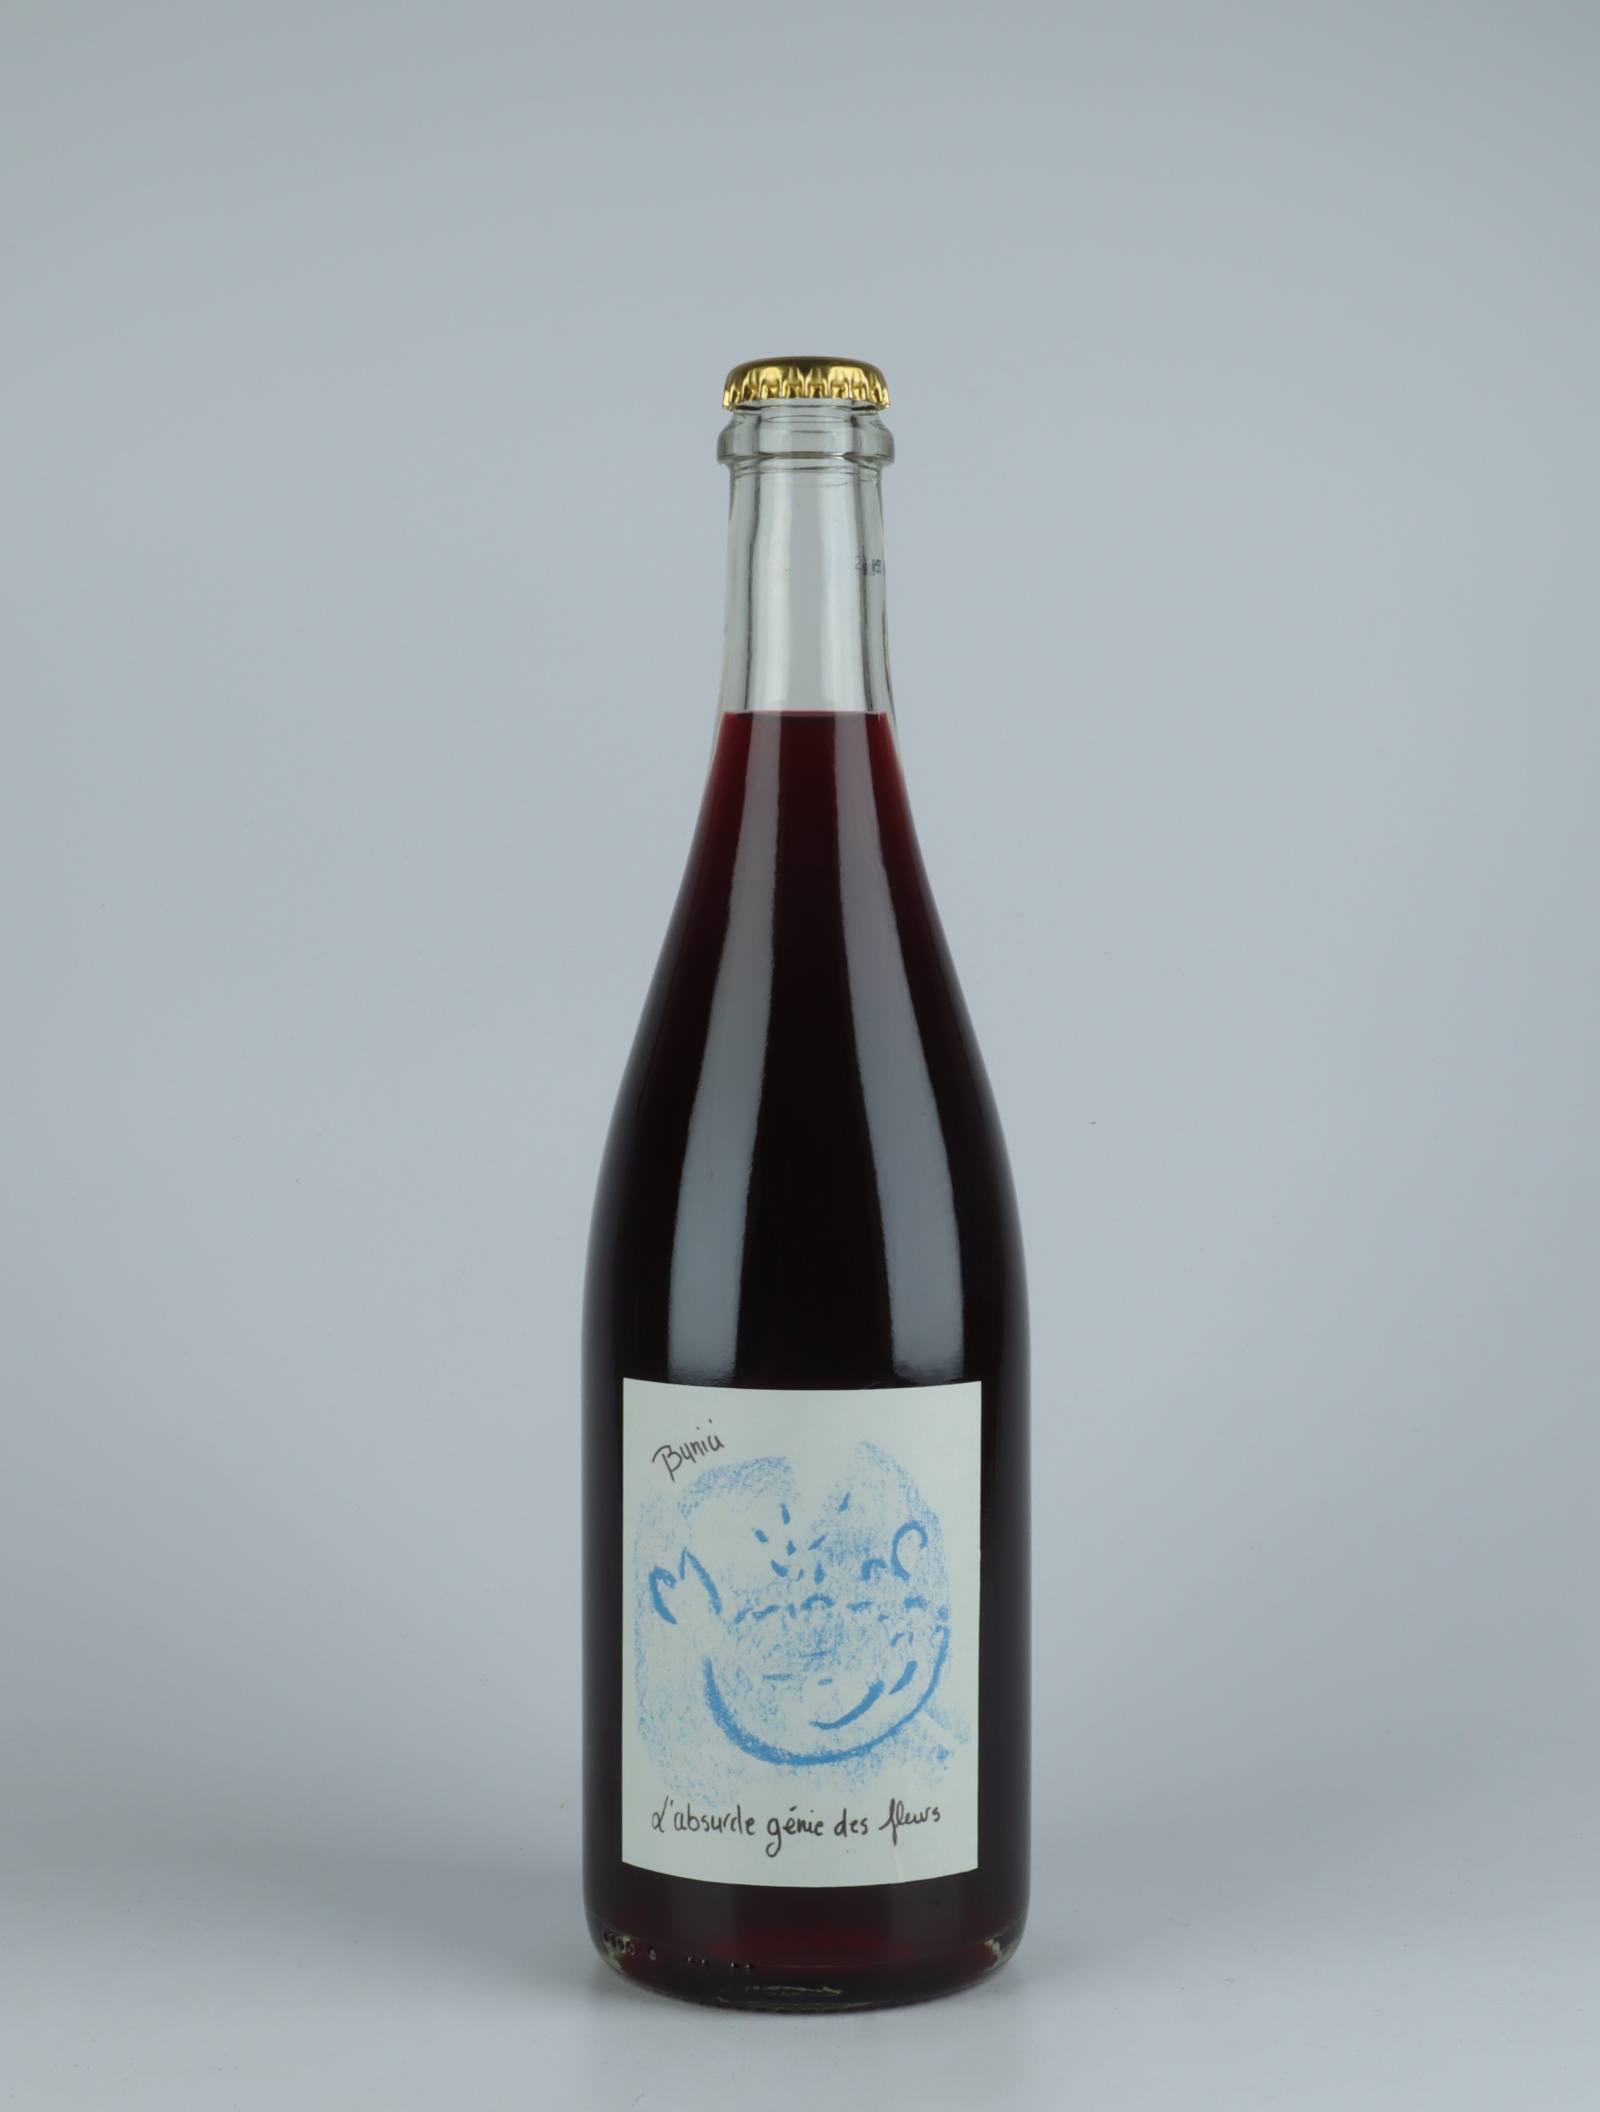 A bottle 2020 Bunici Red wine from Absurde Génie des Fleurs, Languedoc in France